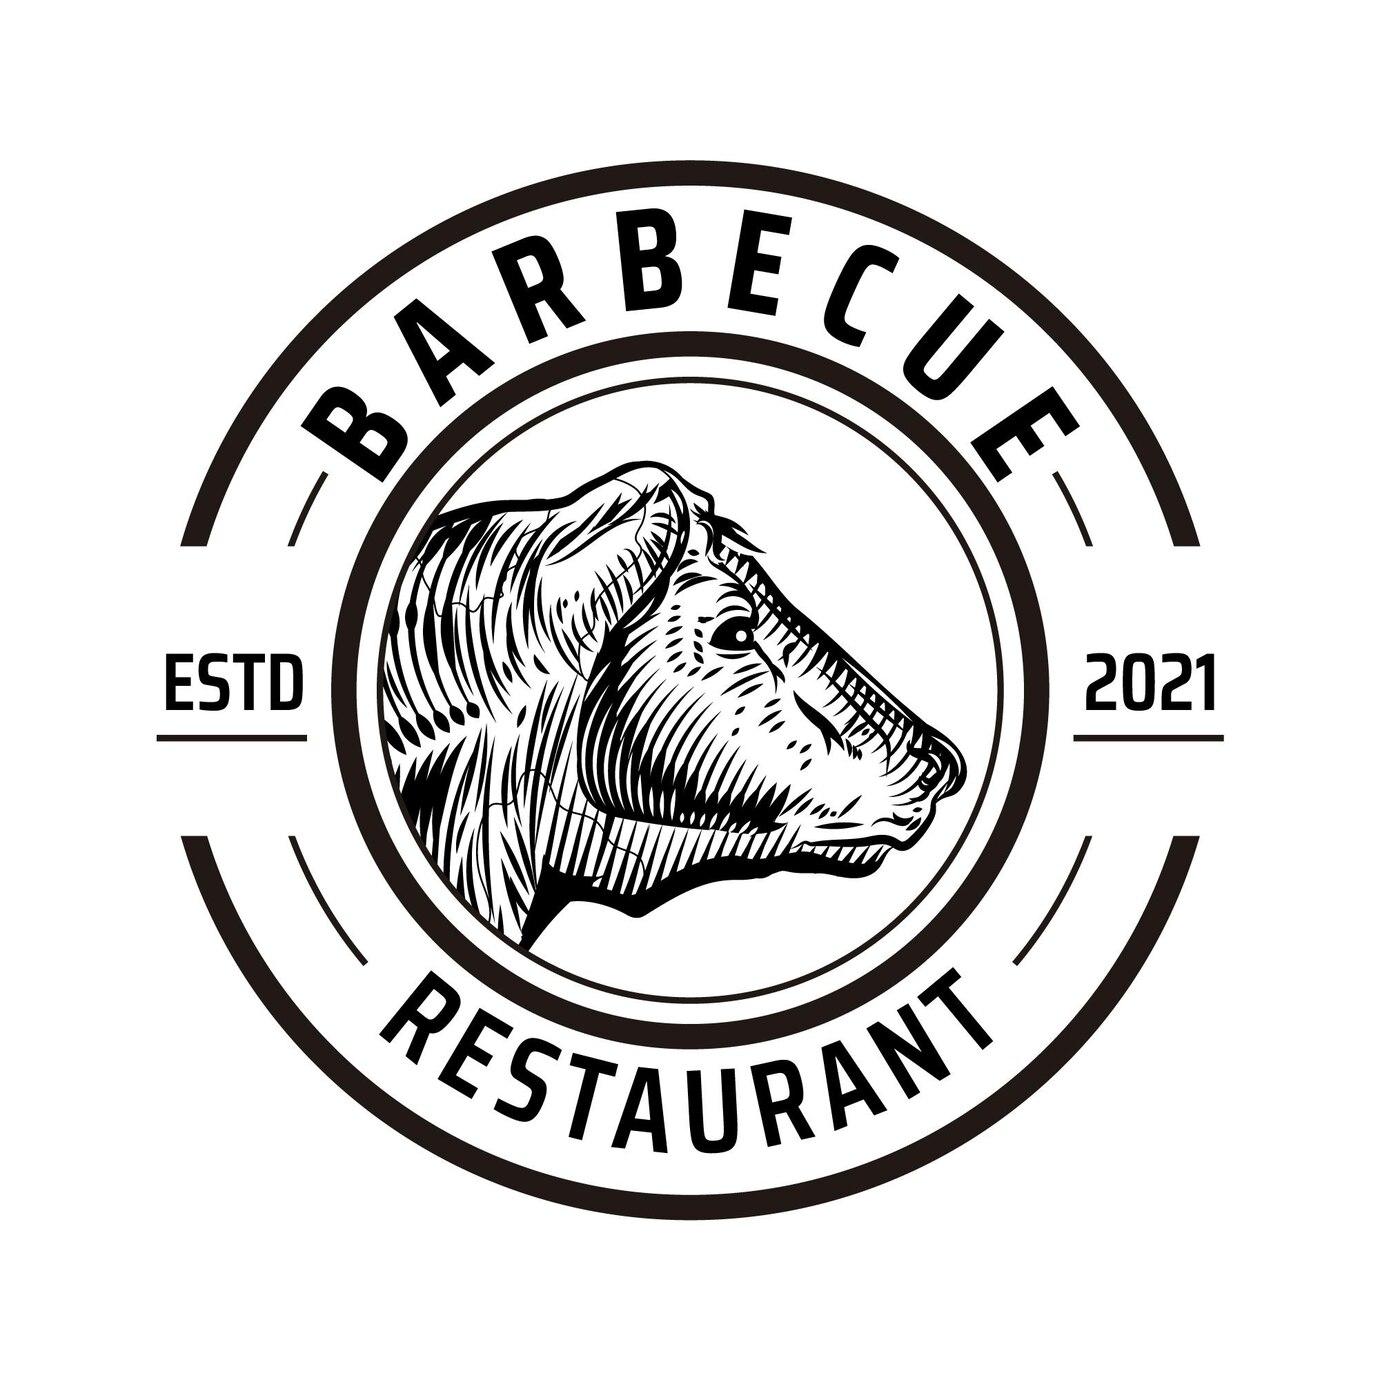 creative-barbecue-logo-template_23-2149017951